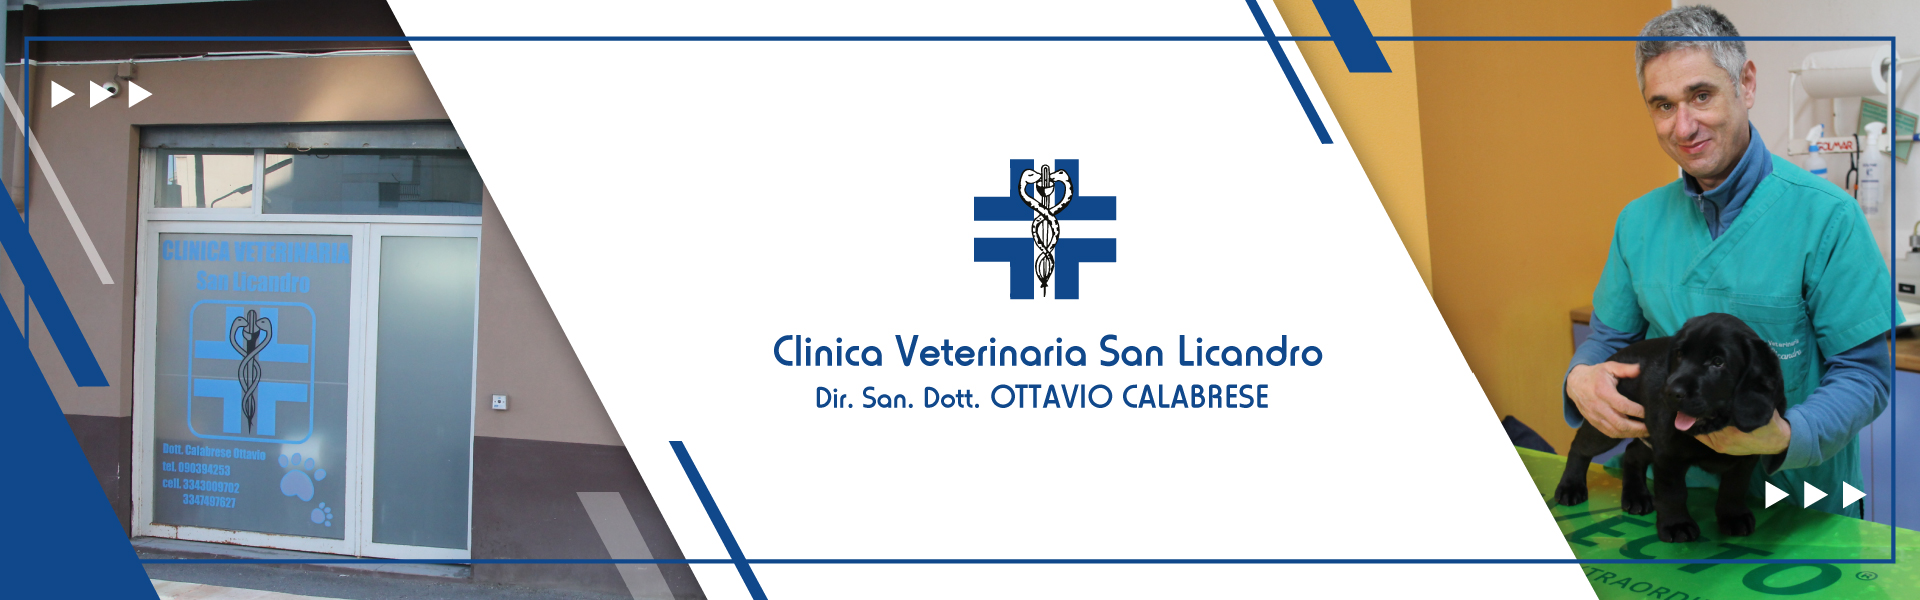 Header Clinica veterinaria Messina